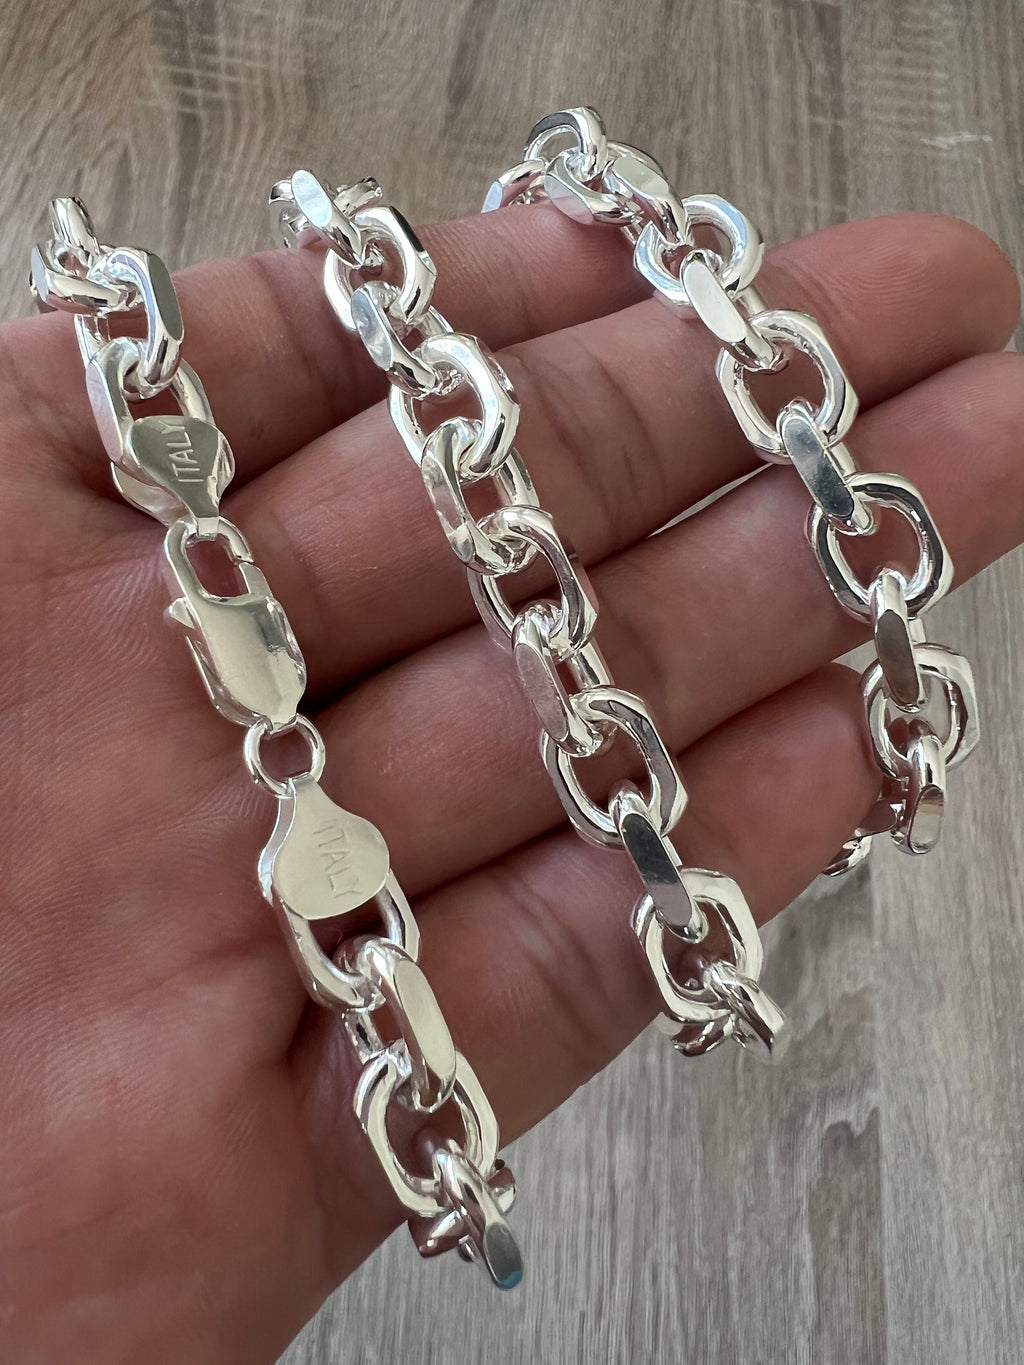 Bracelet Women Men Stainless Steel Gold Link Chain Unisex Jewelry Gift 